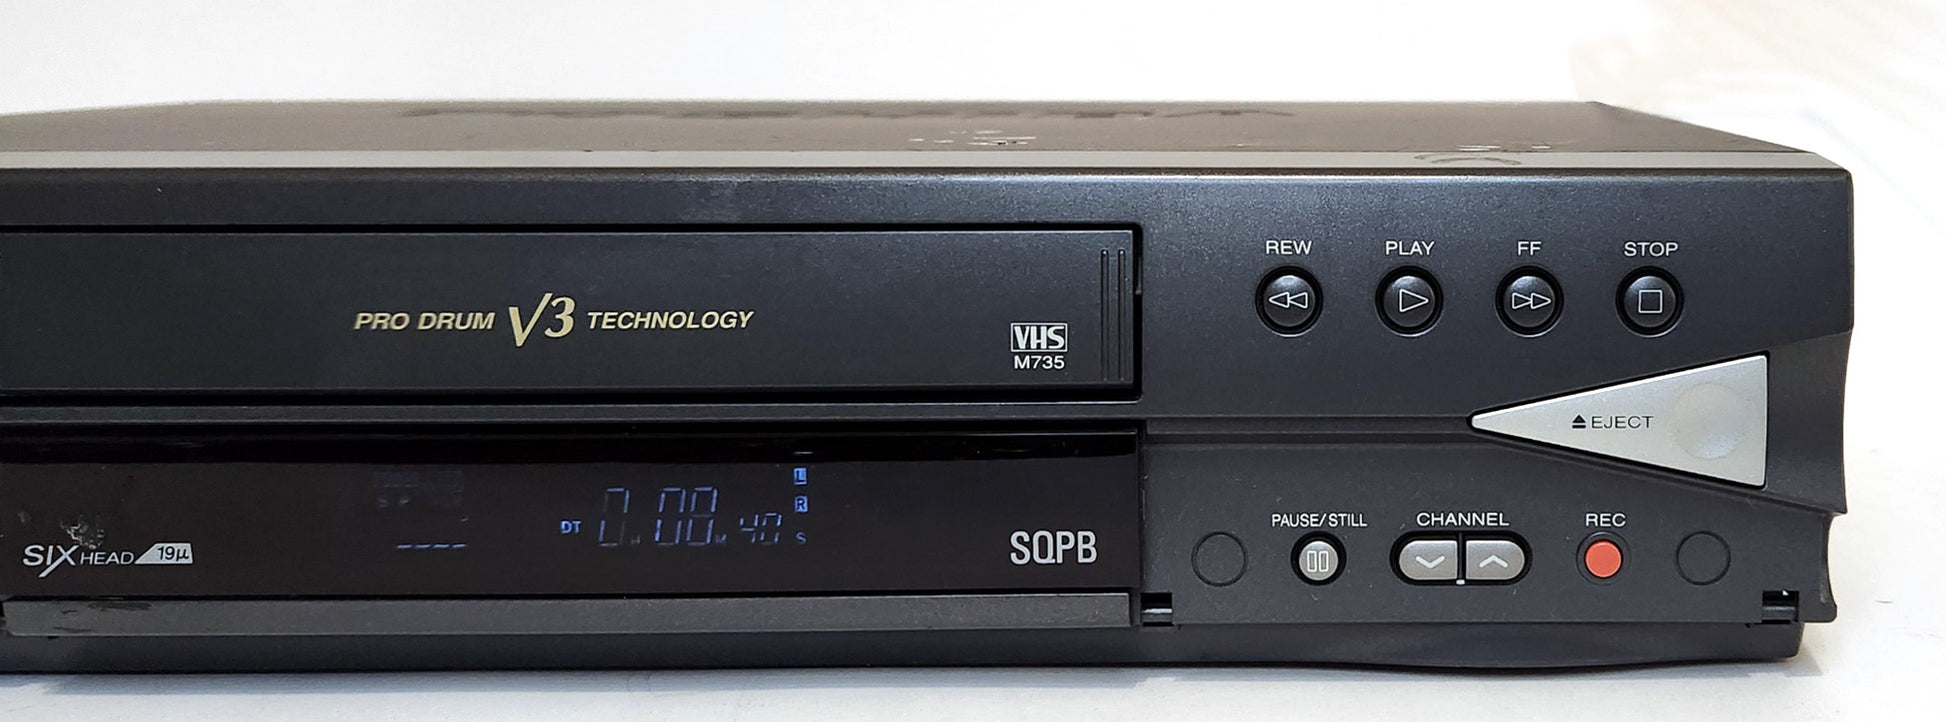 Toshiba M-735 VCR, 6-Head Hi-Fi Stereo - Right